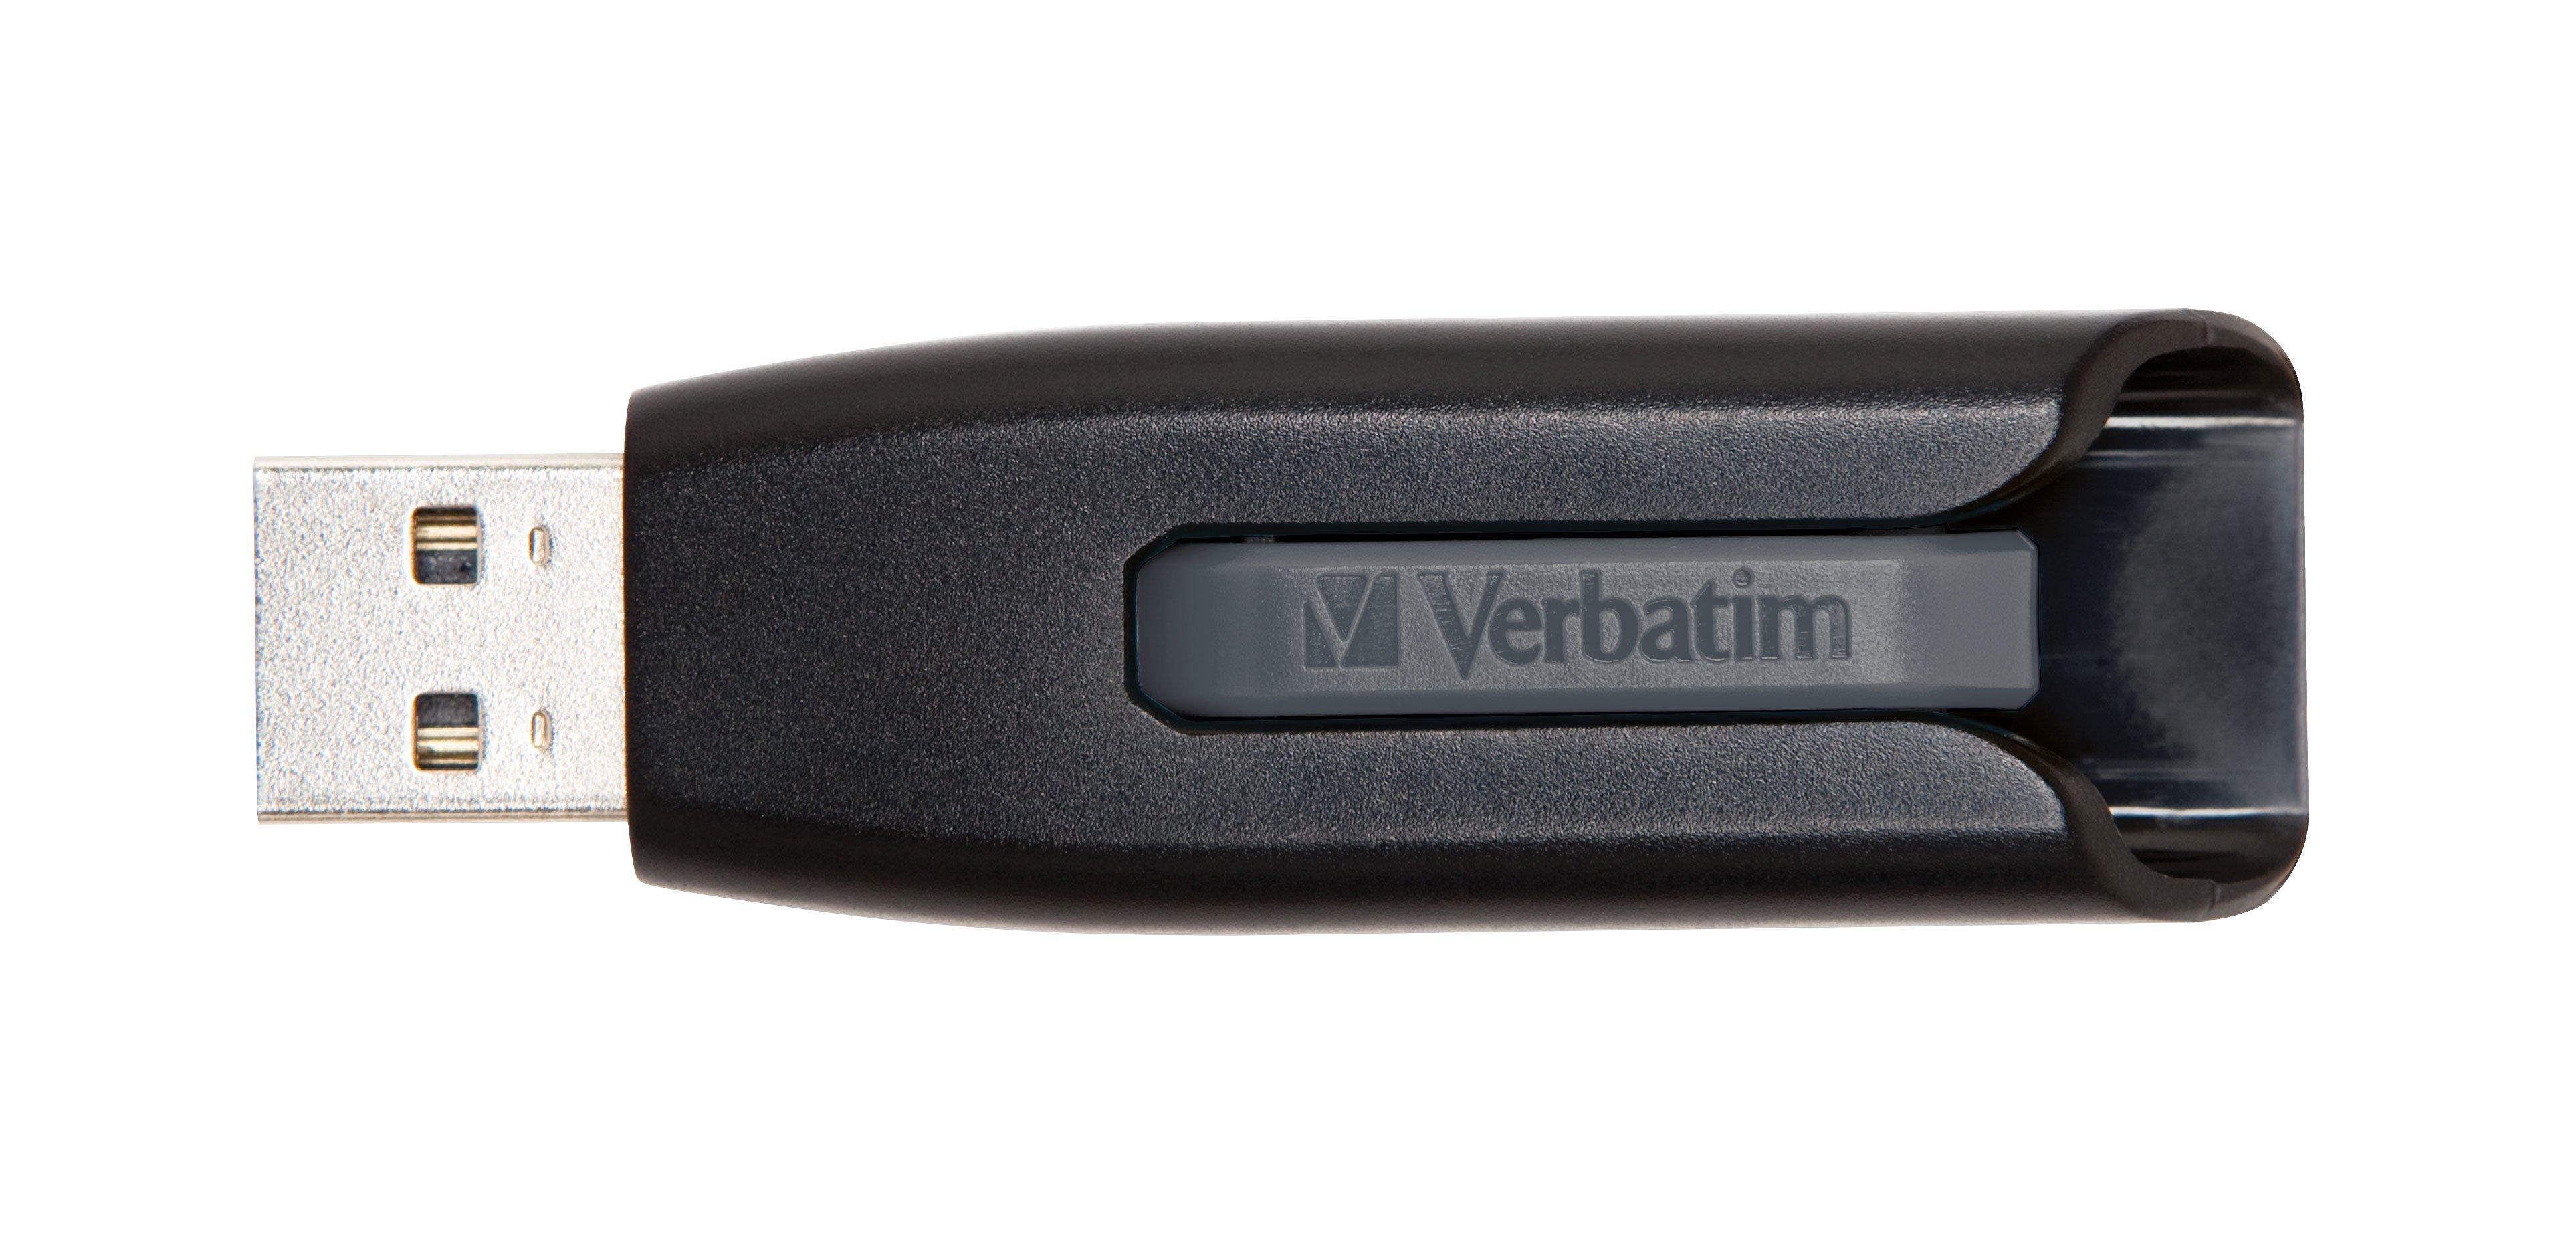 Verbatim  Verbatim V3 - USB 3.0-Stick 64 GB - Schwarz 